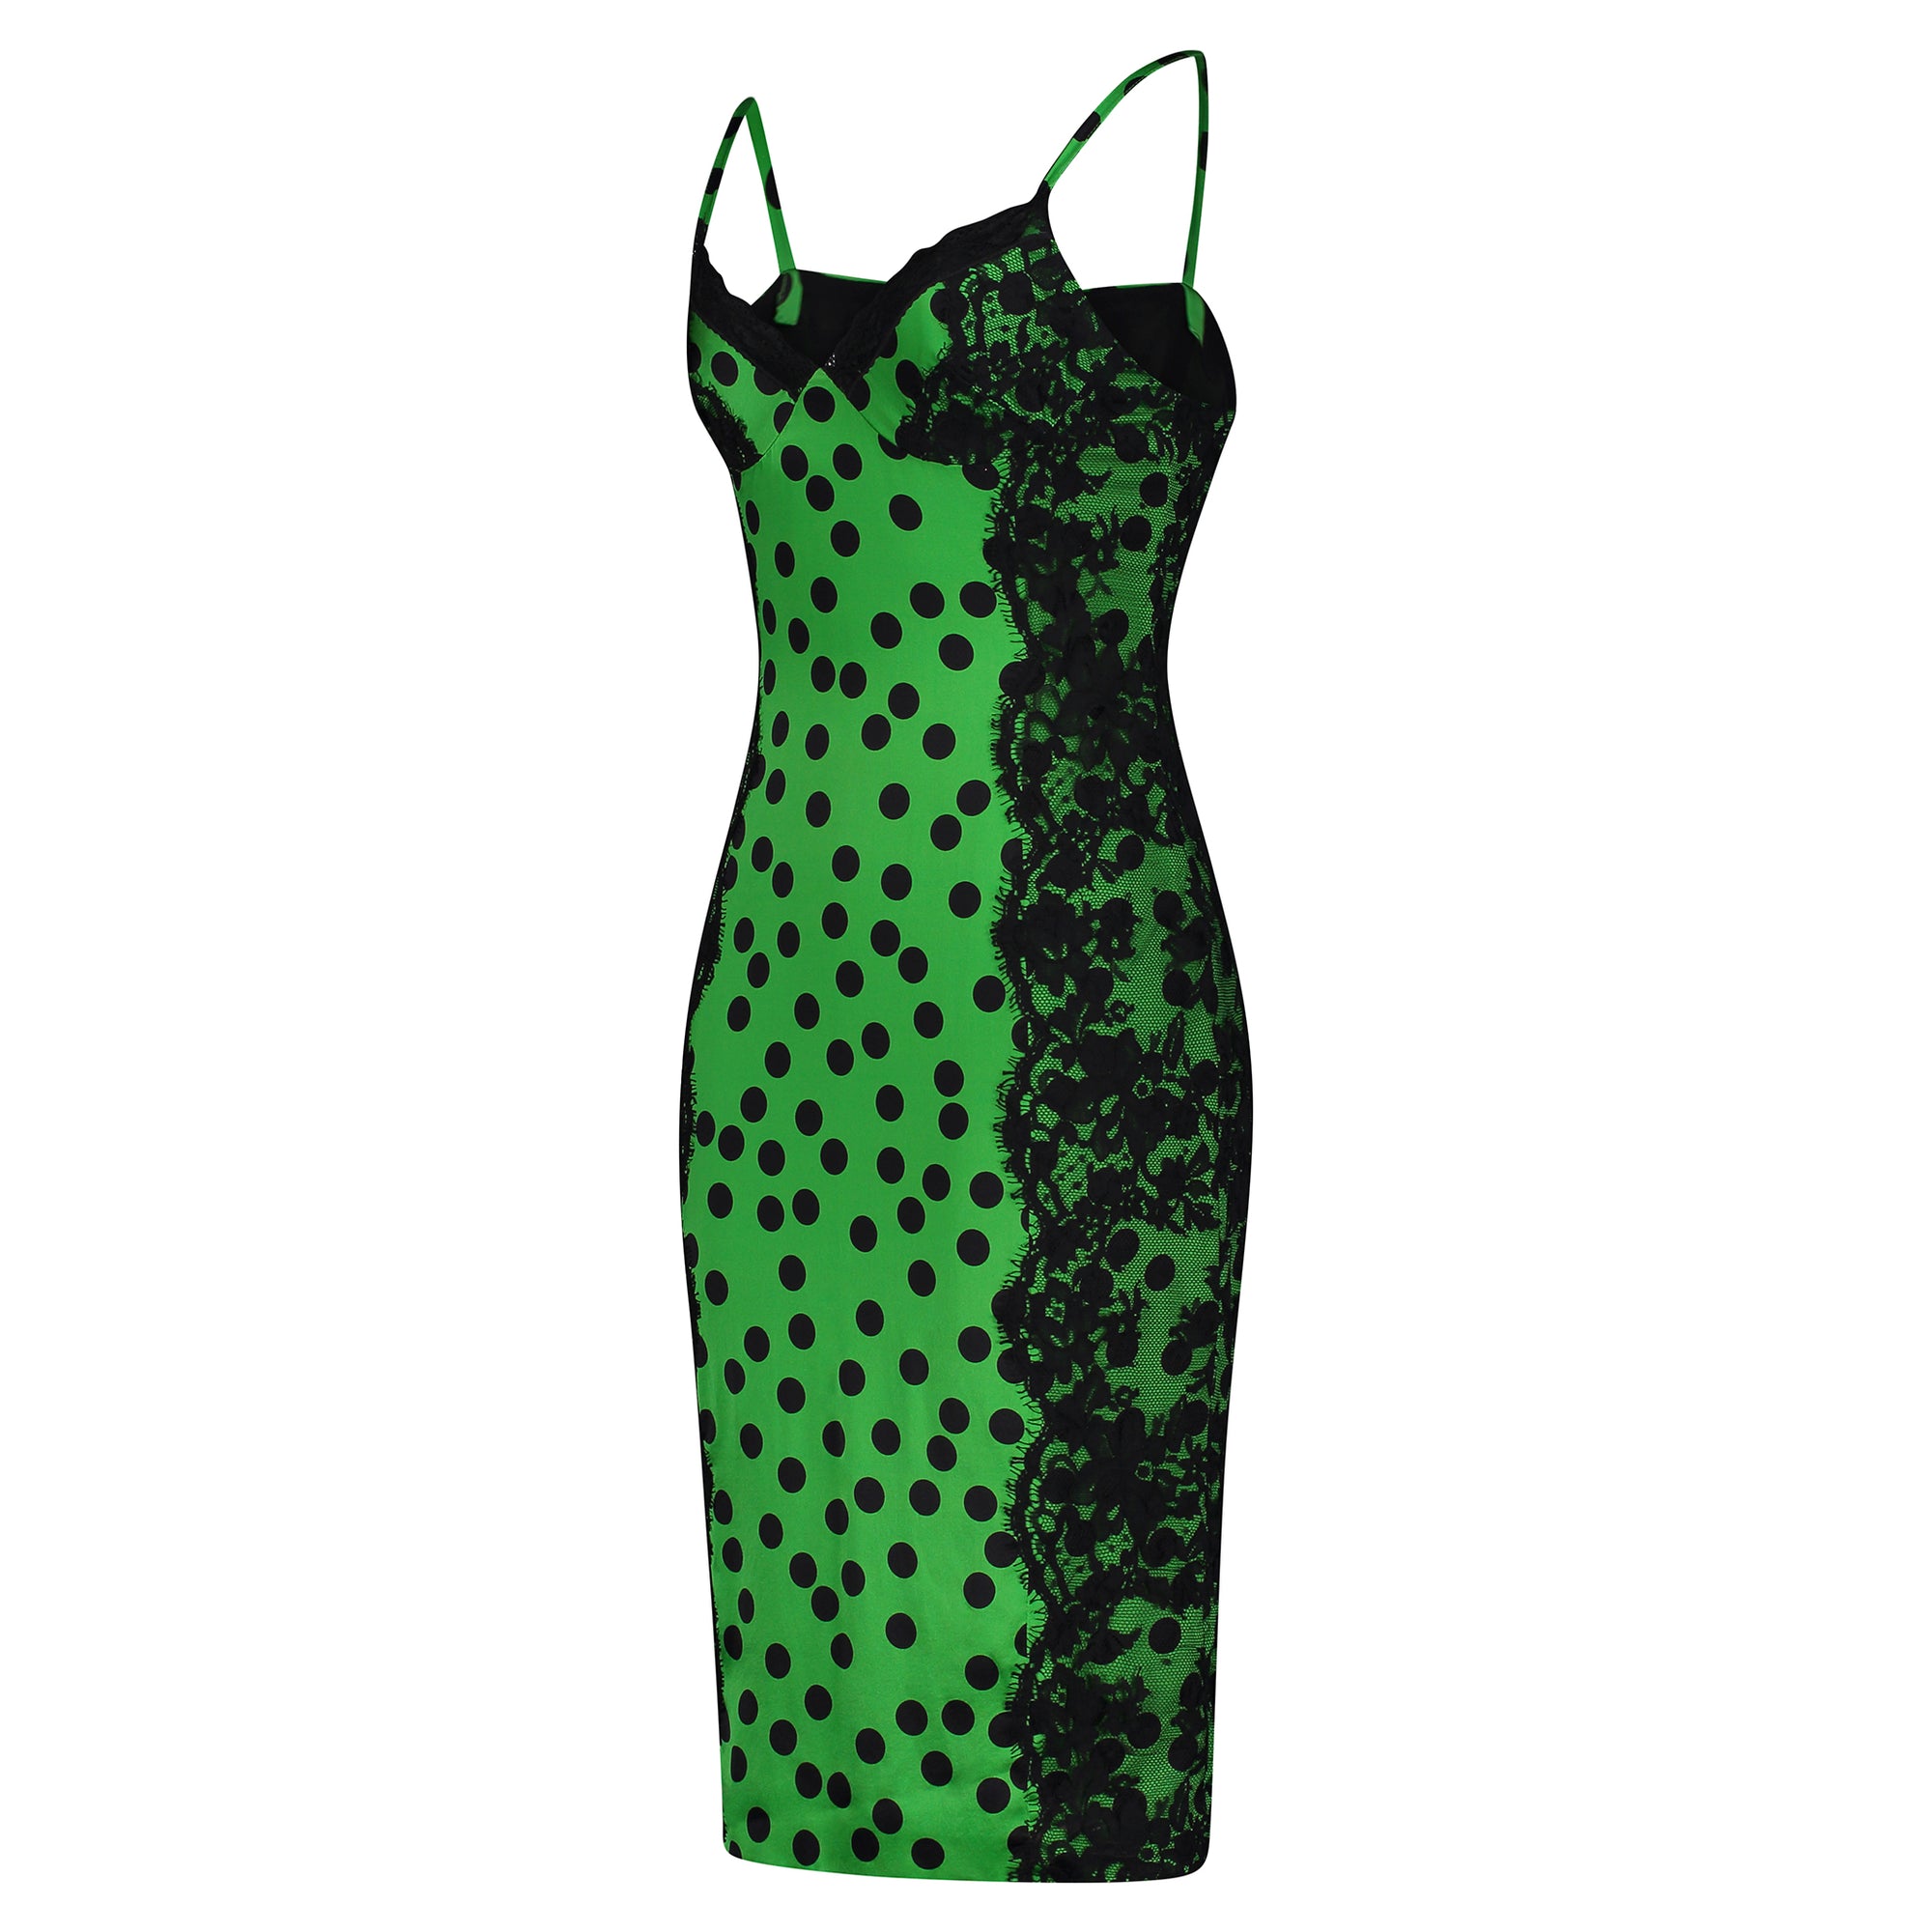 Dolce & Gabbana Festive Green Polka Dot Lace Trim Cocktail Dress